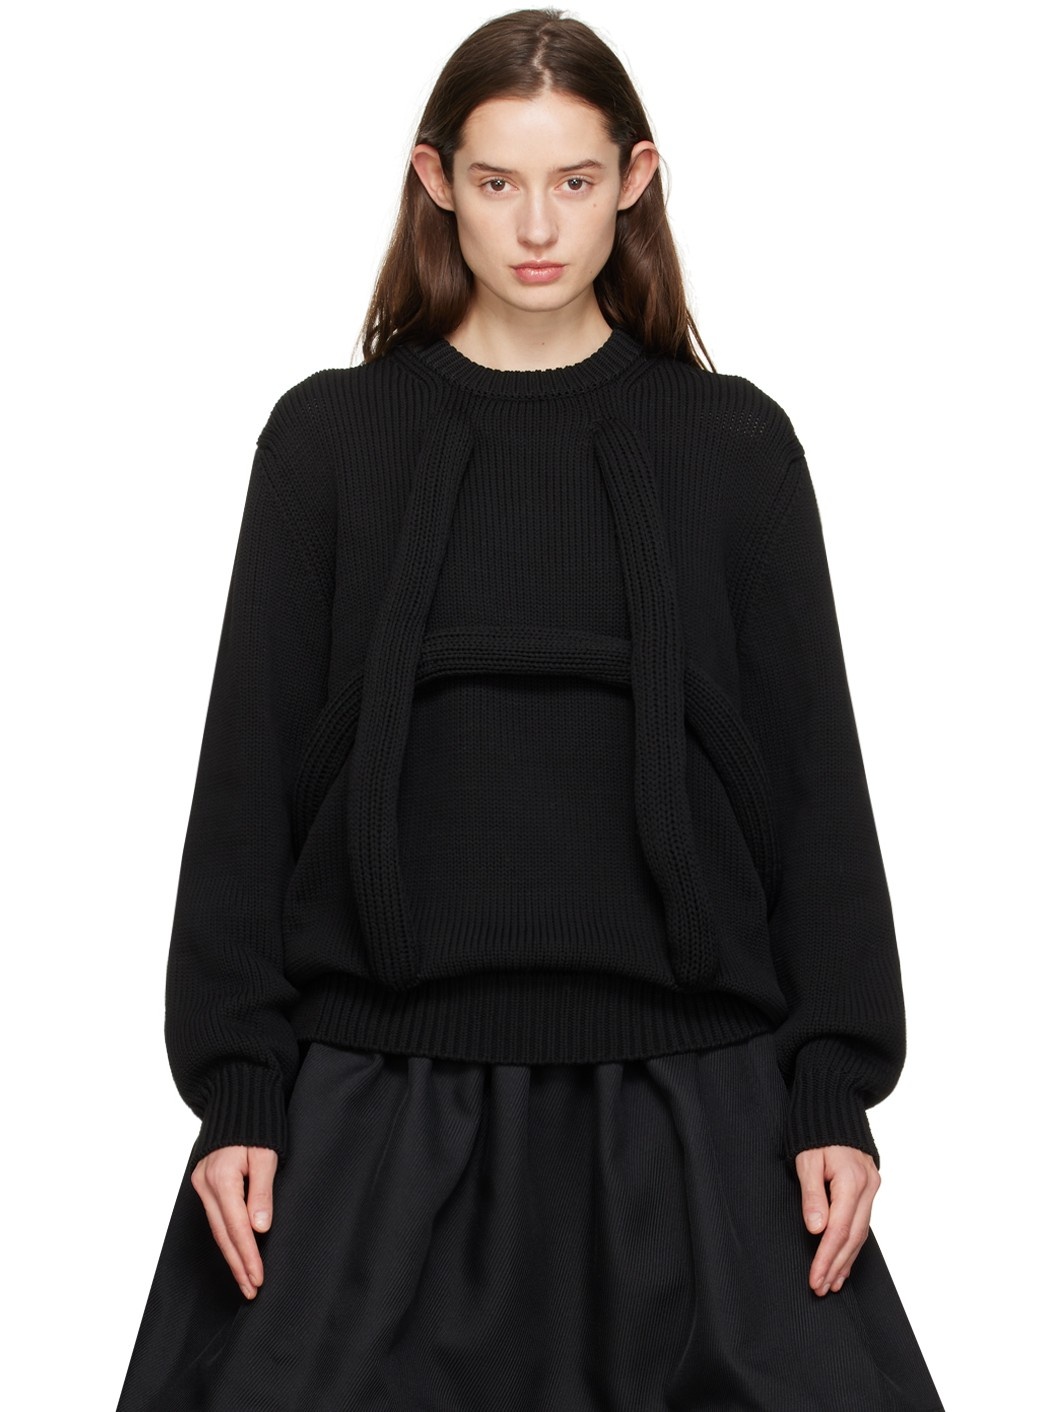 Black Overlay Sweater - 1